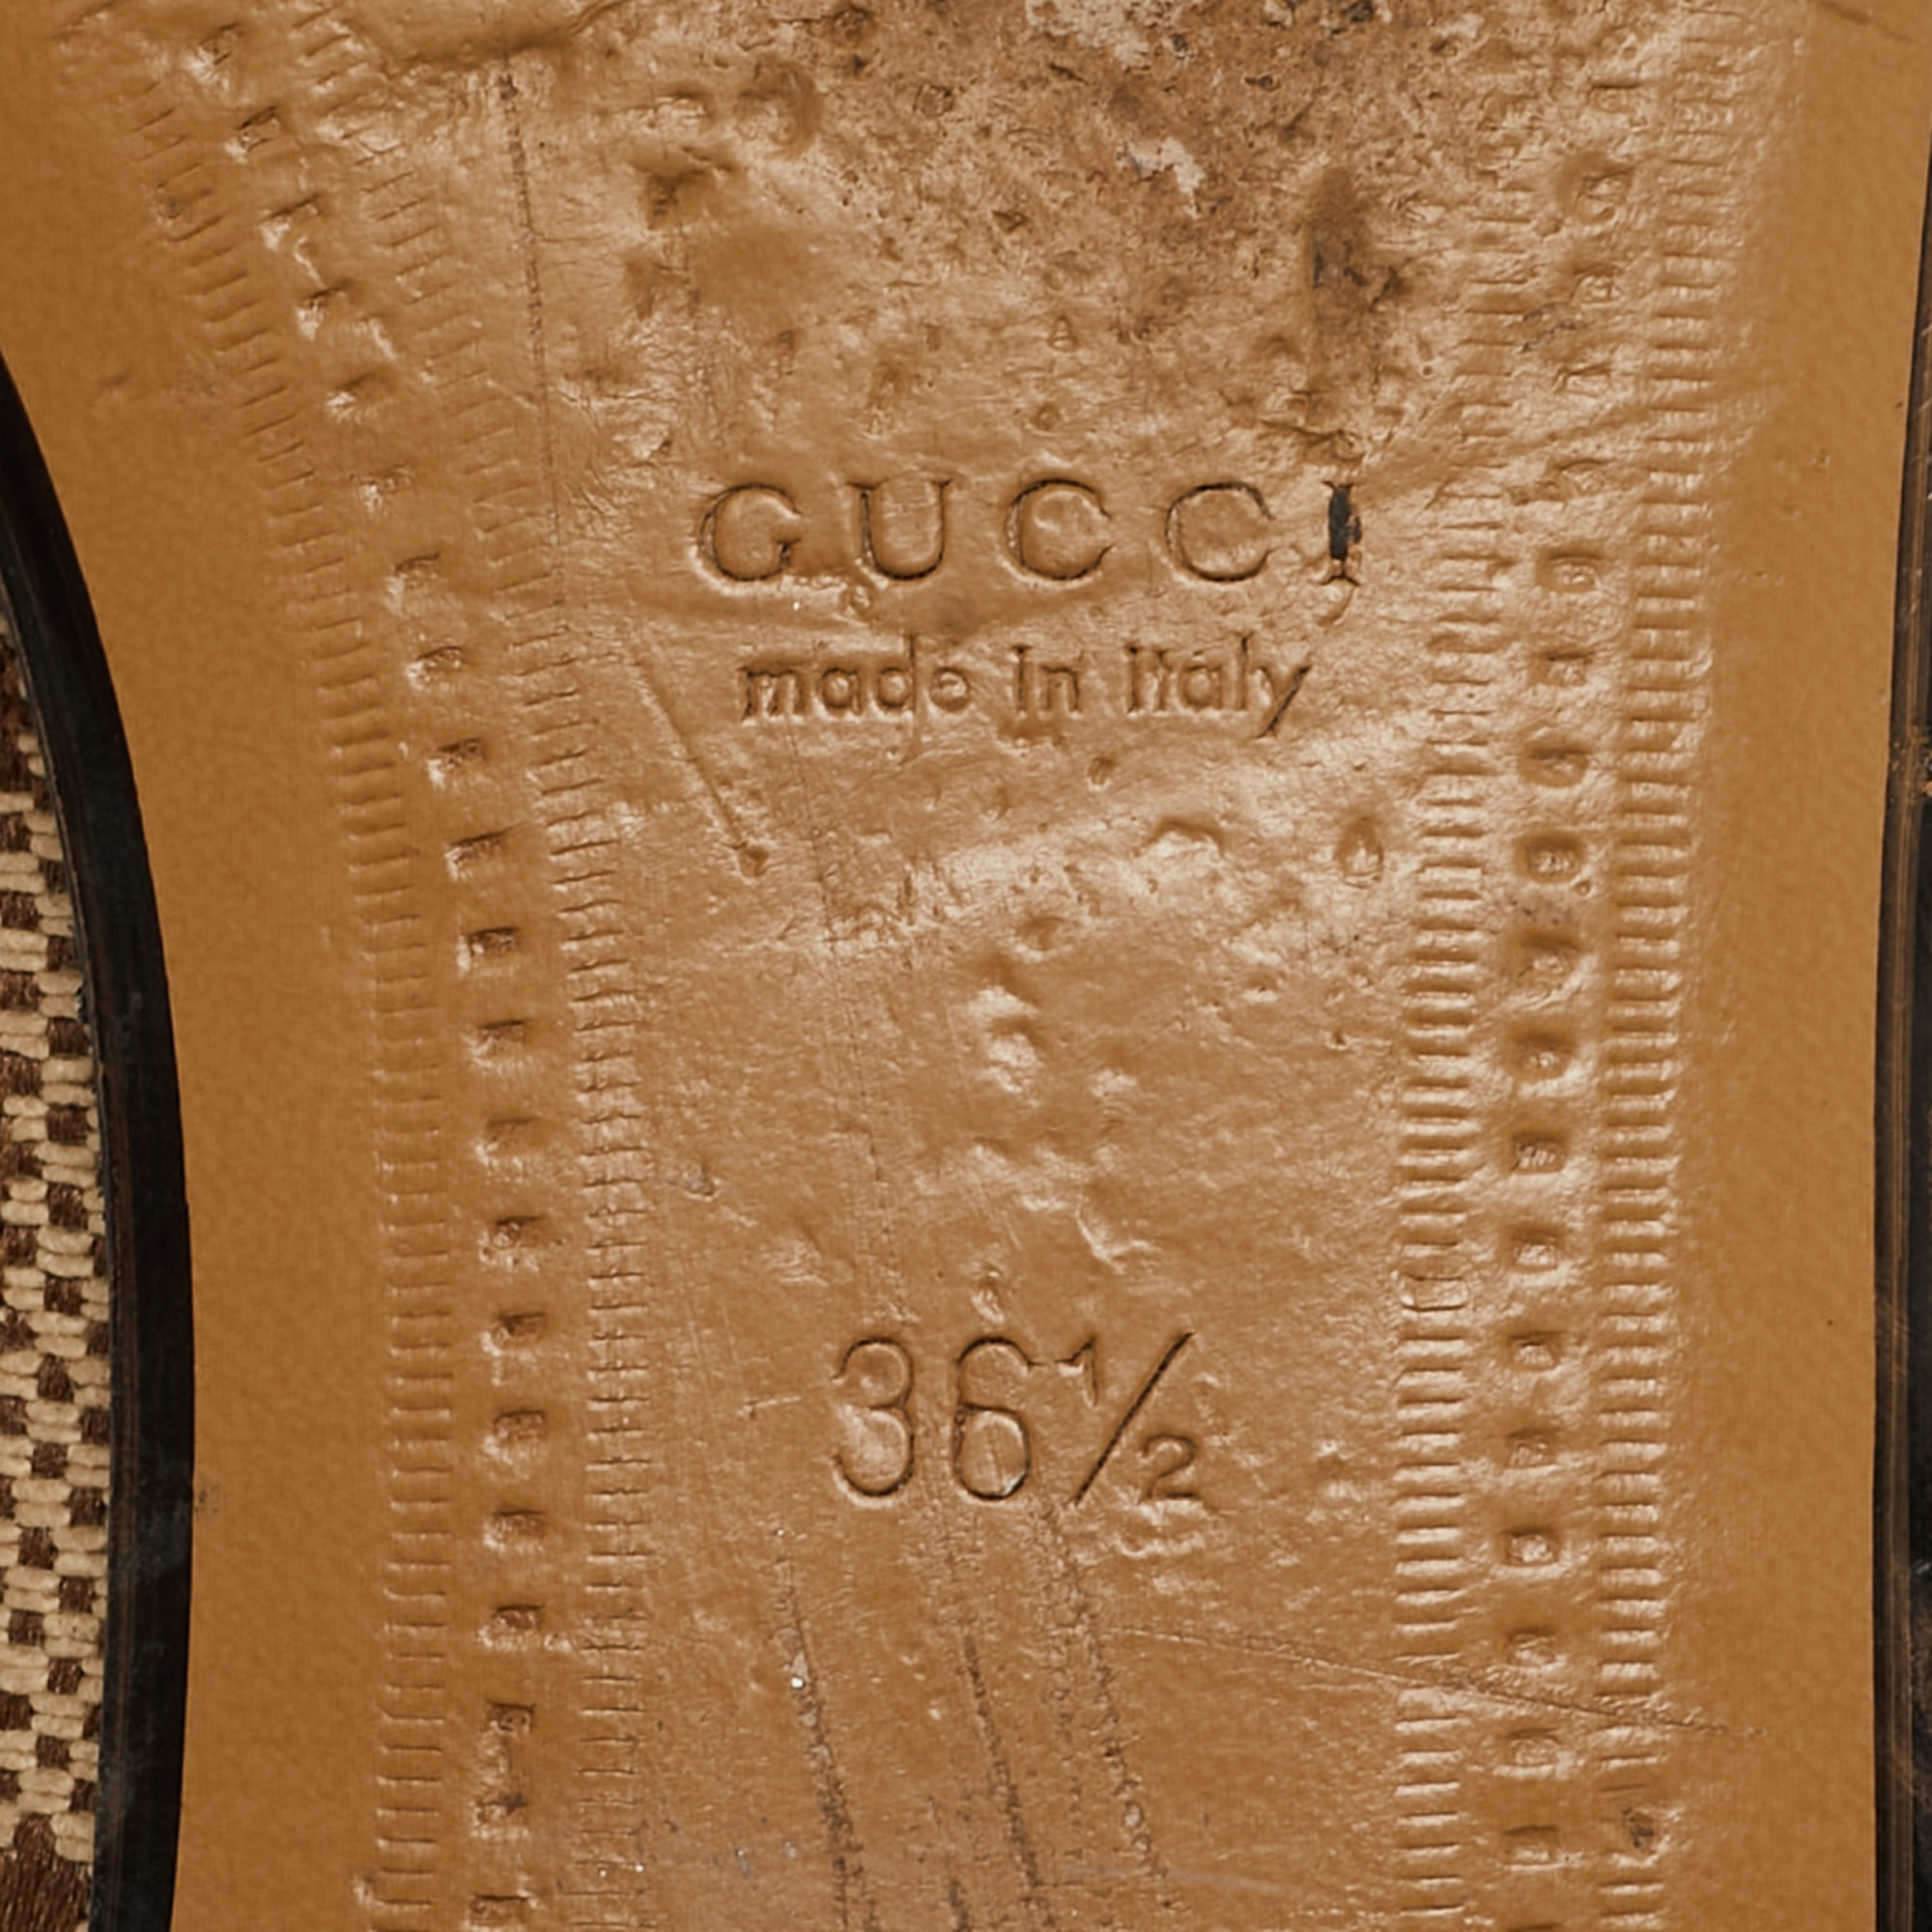 Gucci Beige Jumbo GG Canvas Jordaan Loafers Size 36.5